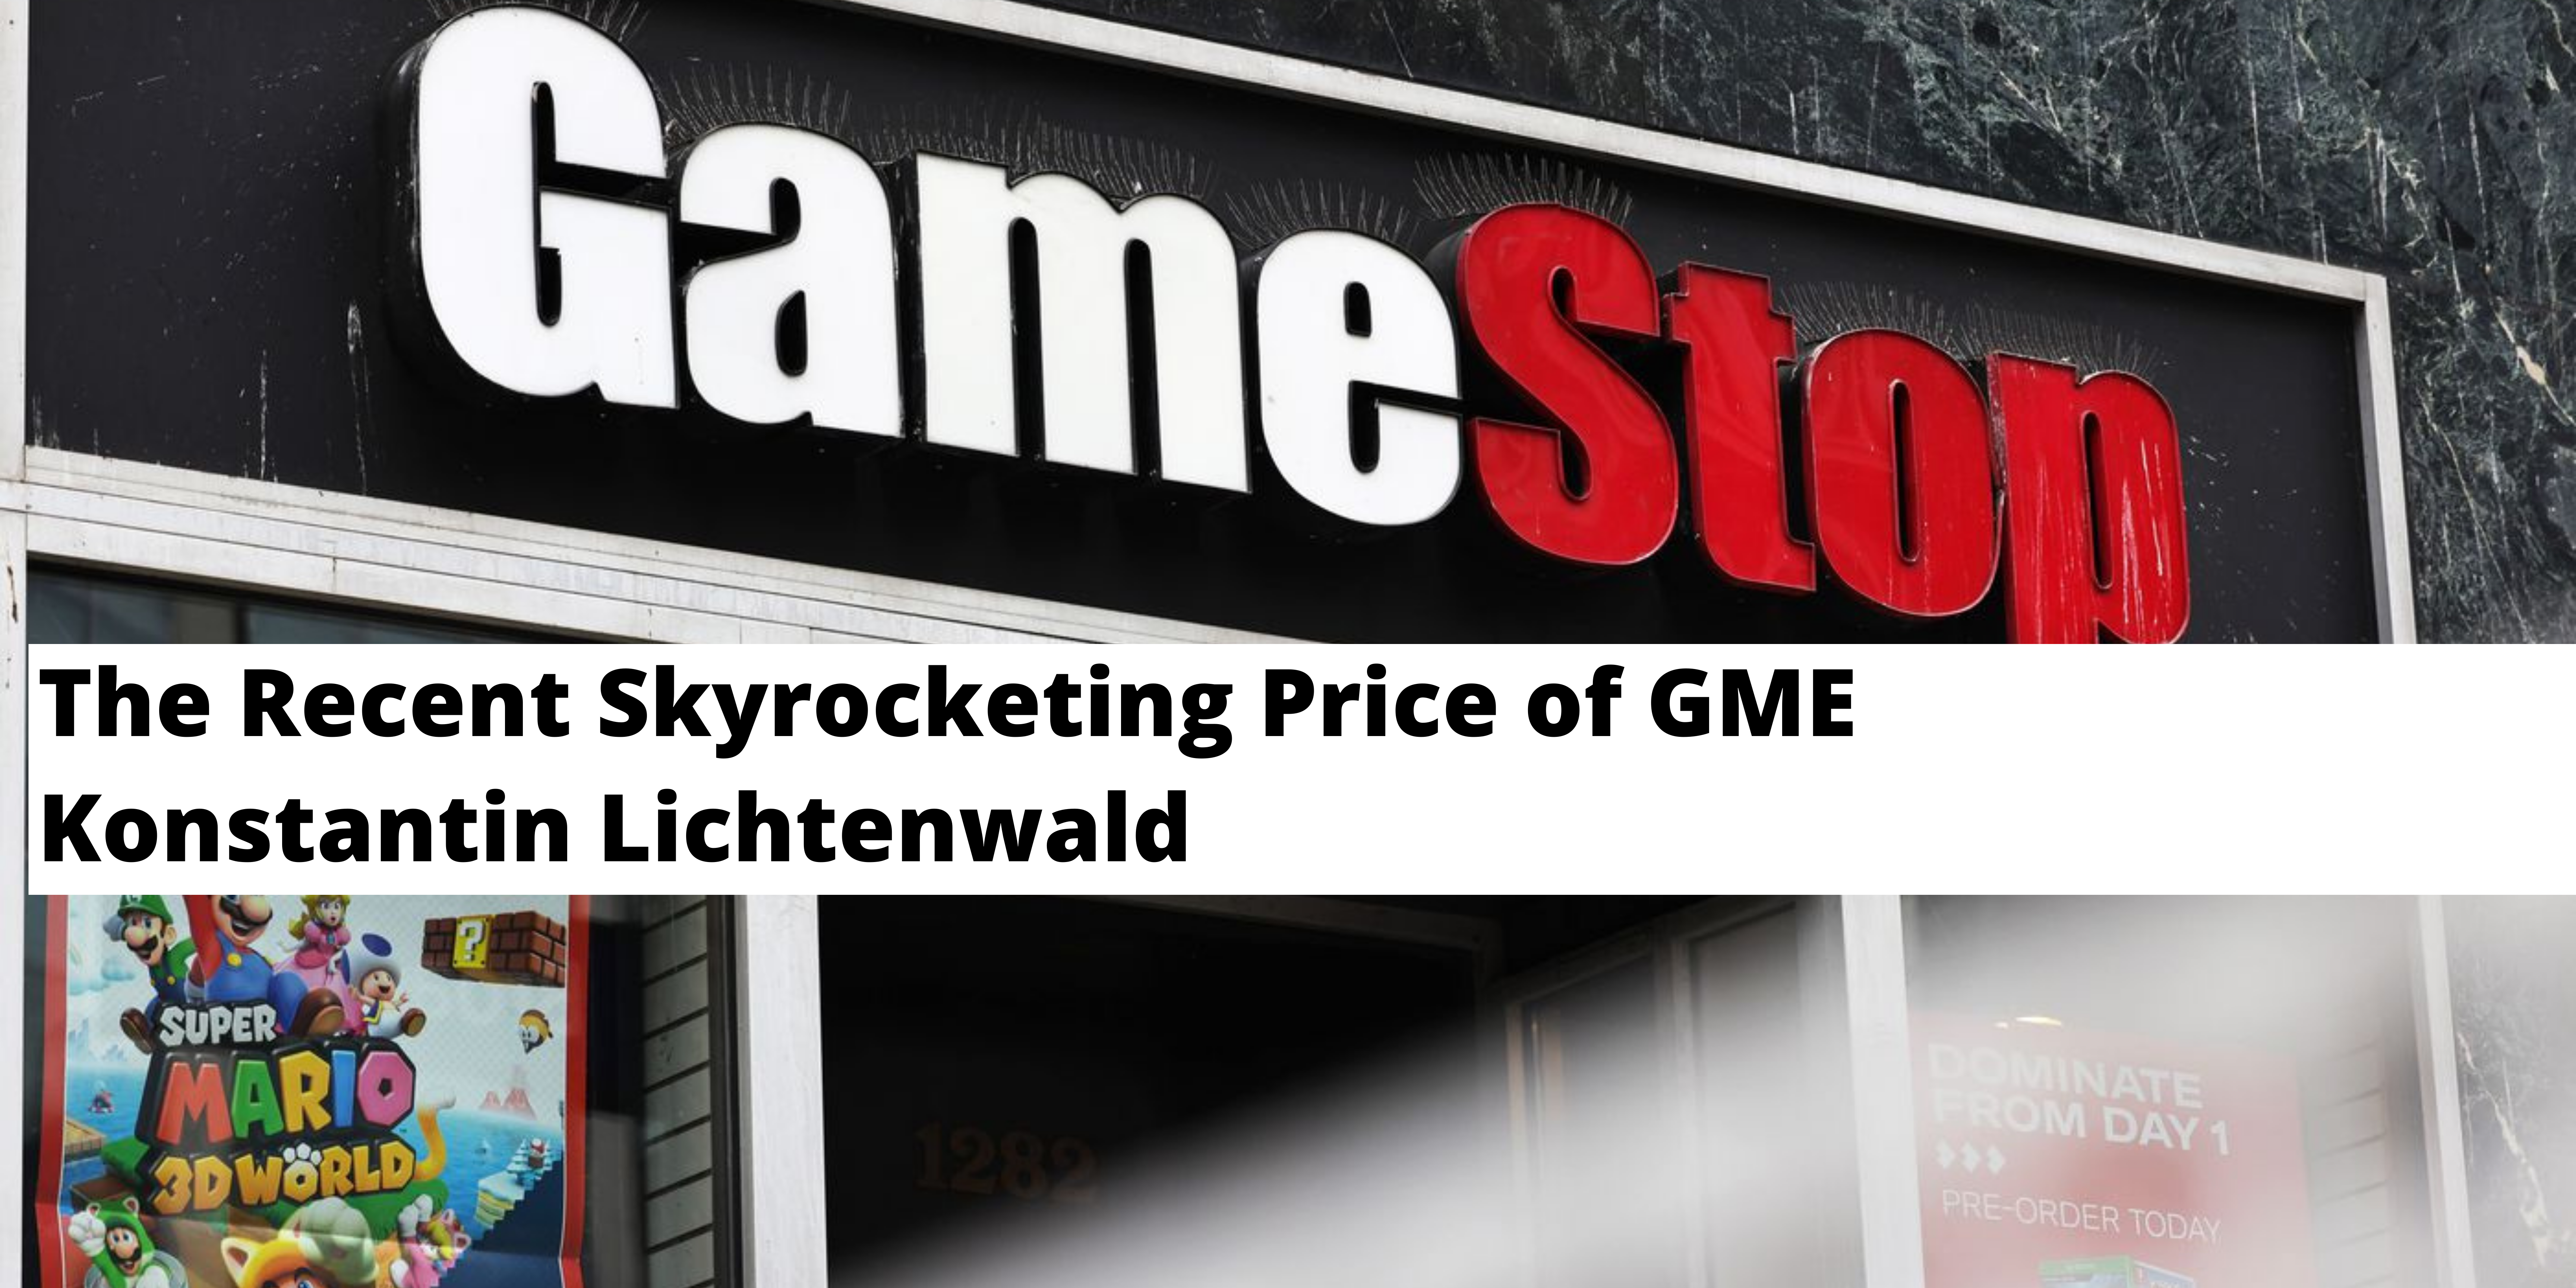 Konstantin Lichtenwald Explains The Recent Skyrocketing Price of GME